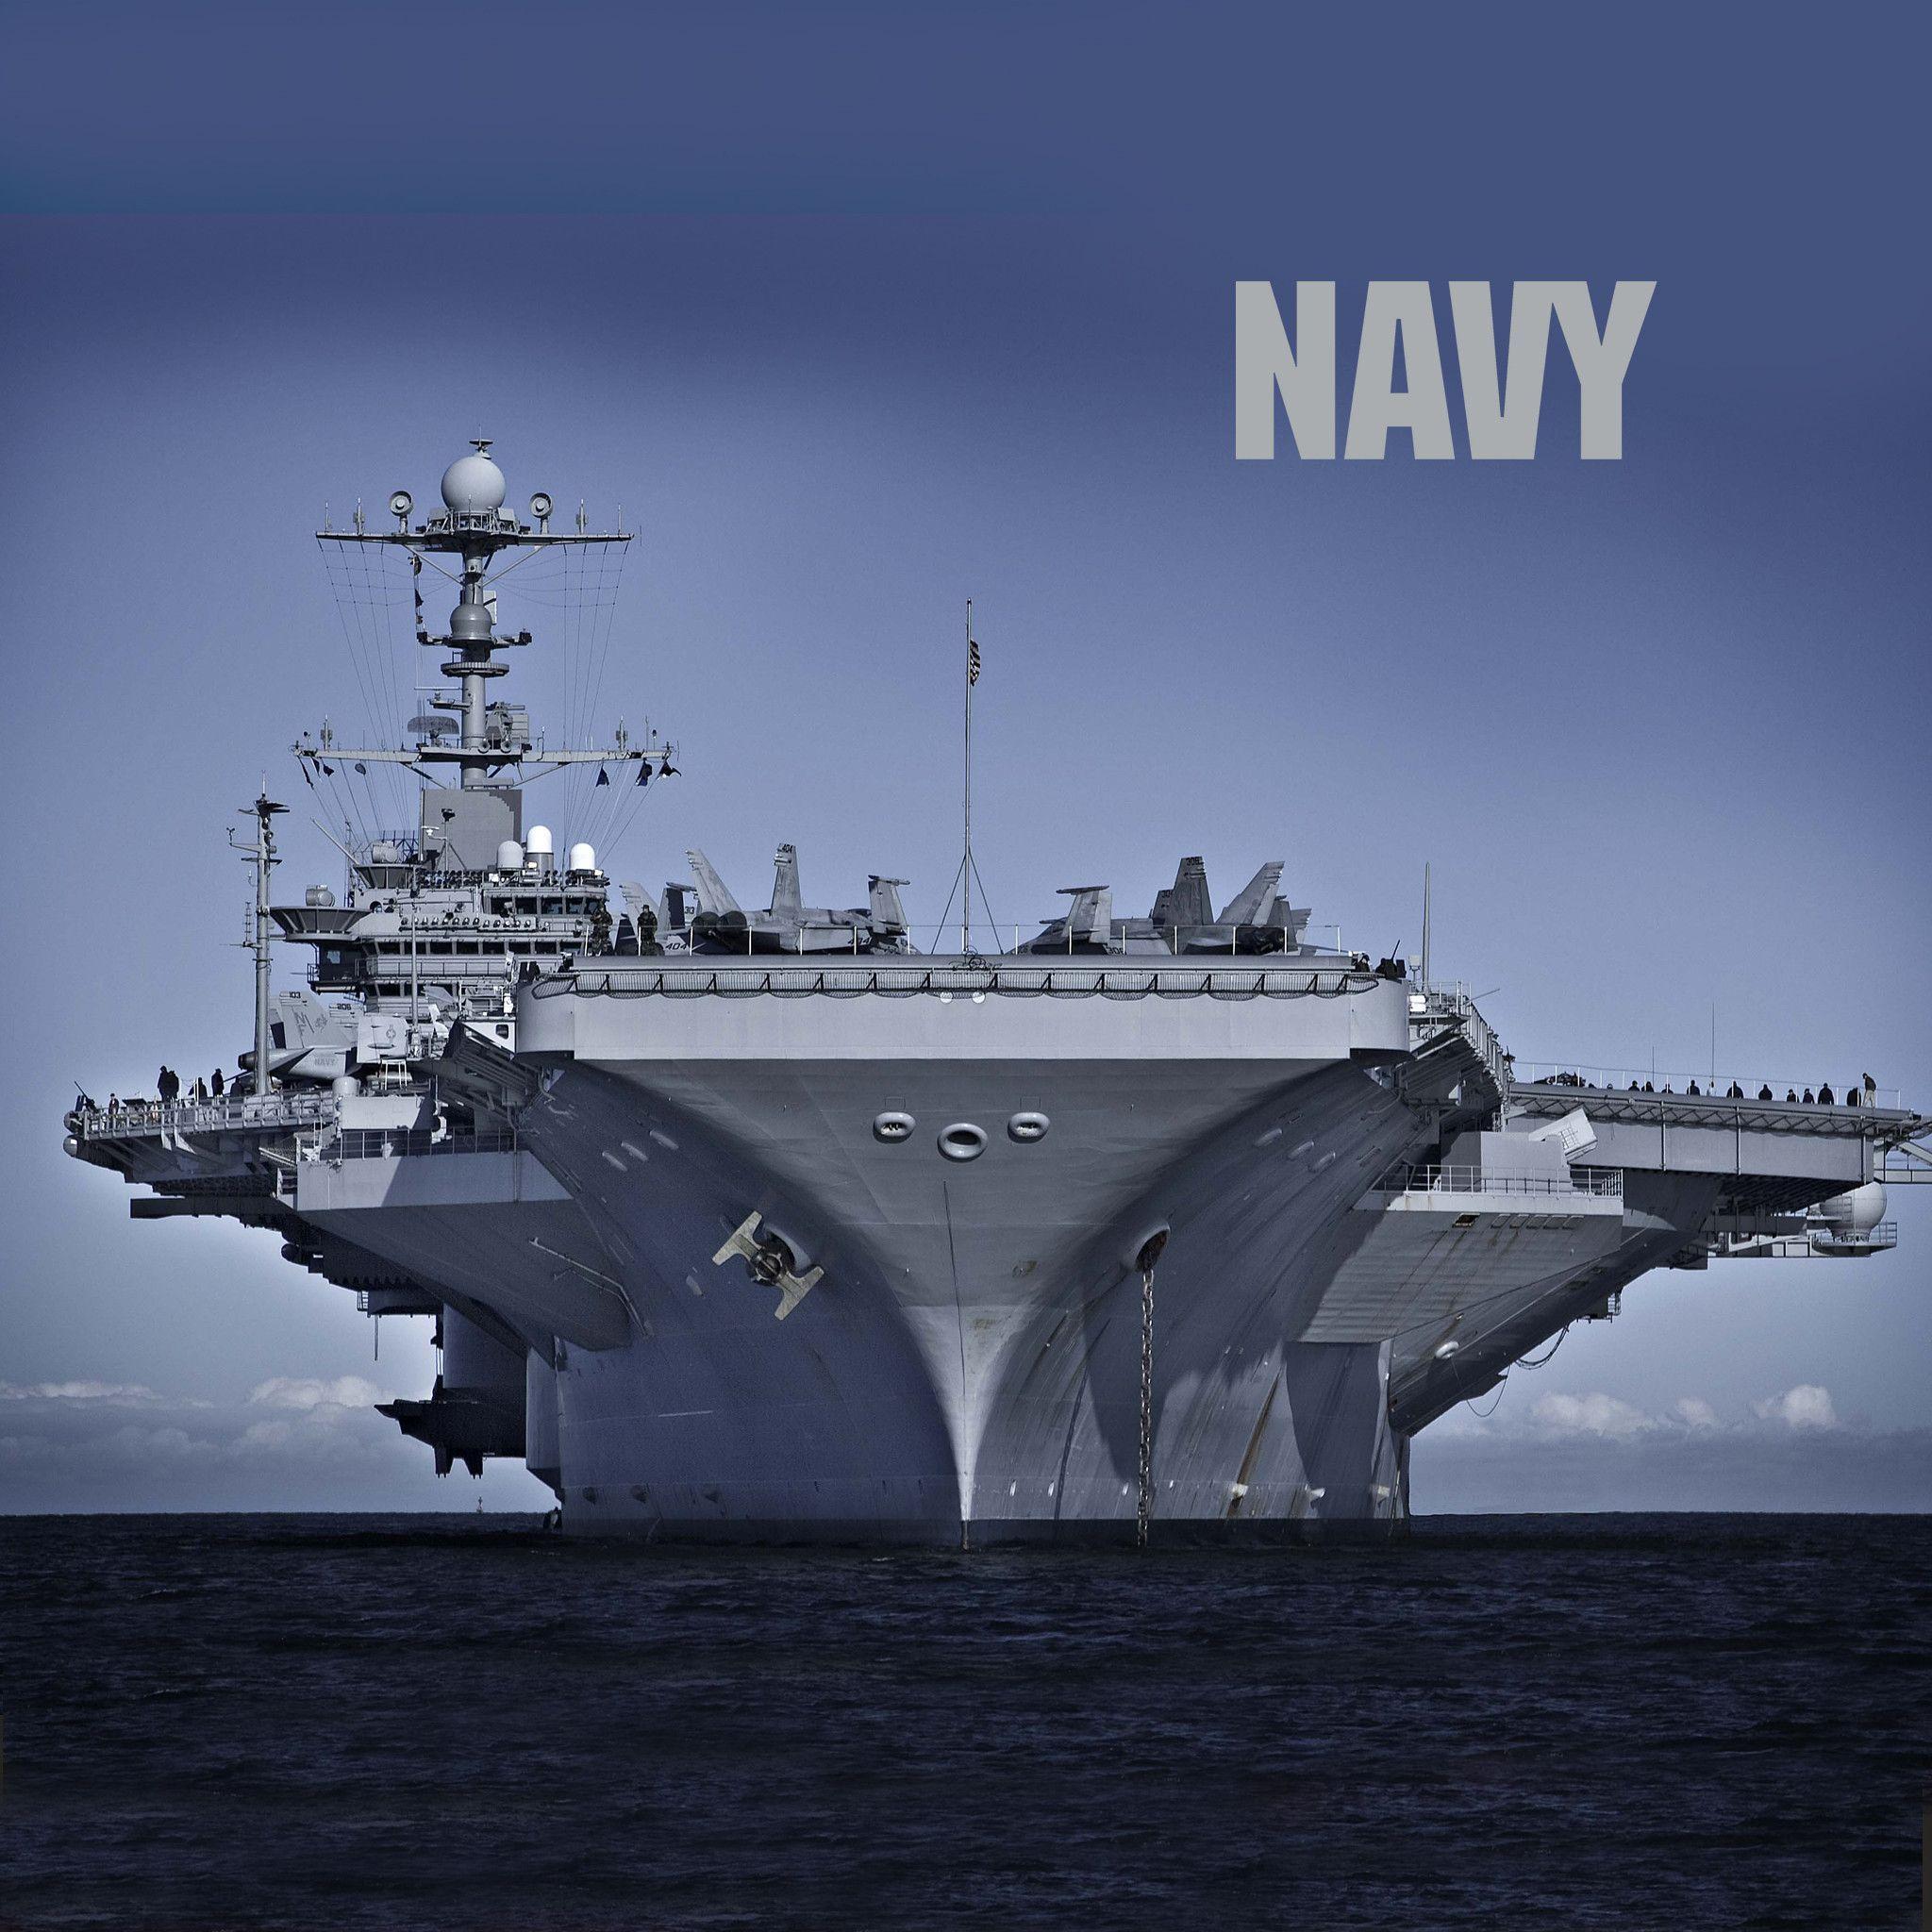 Navy Wallpaper Free Navy Background